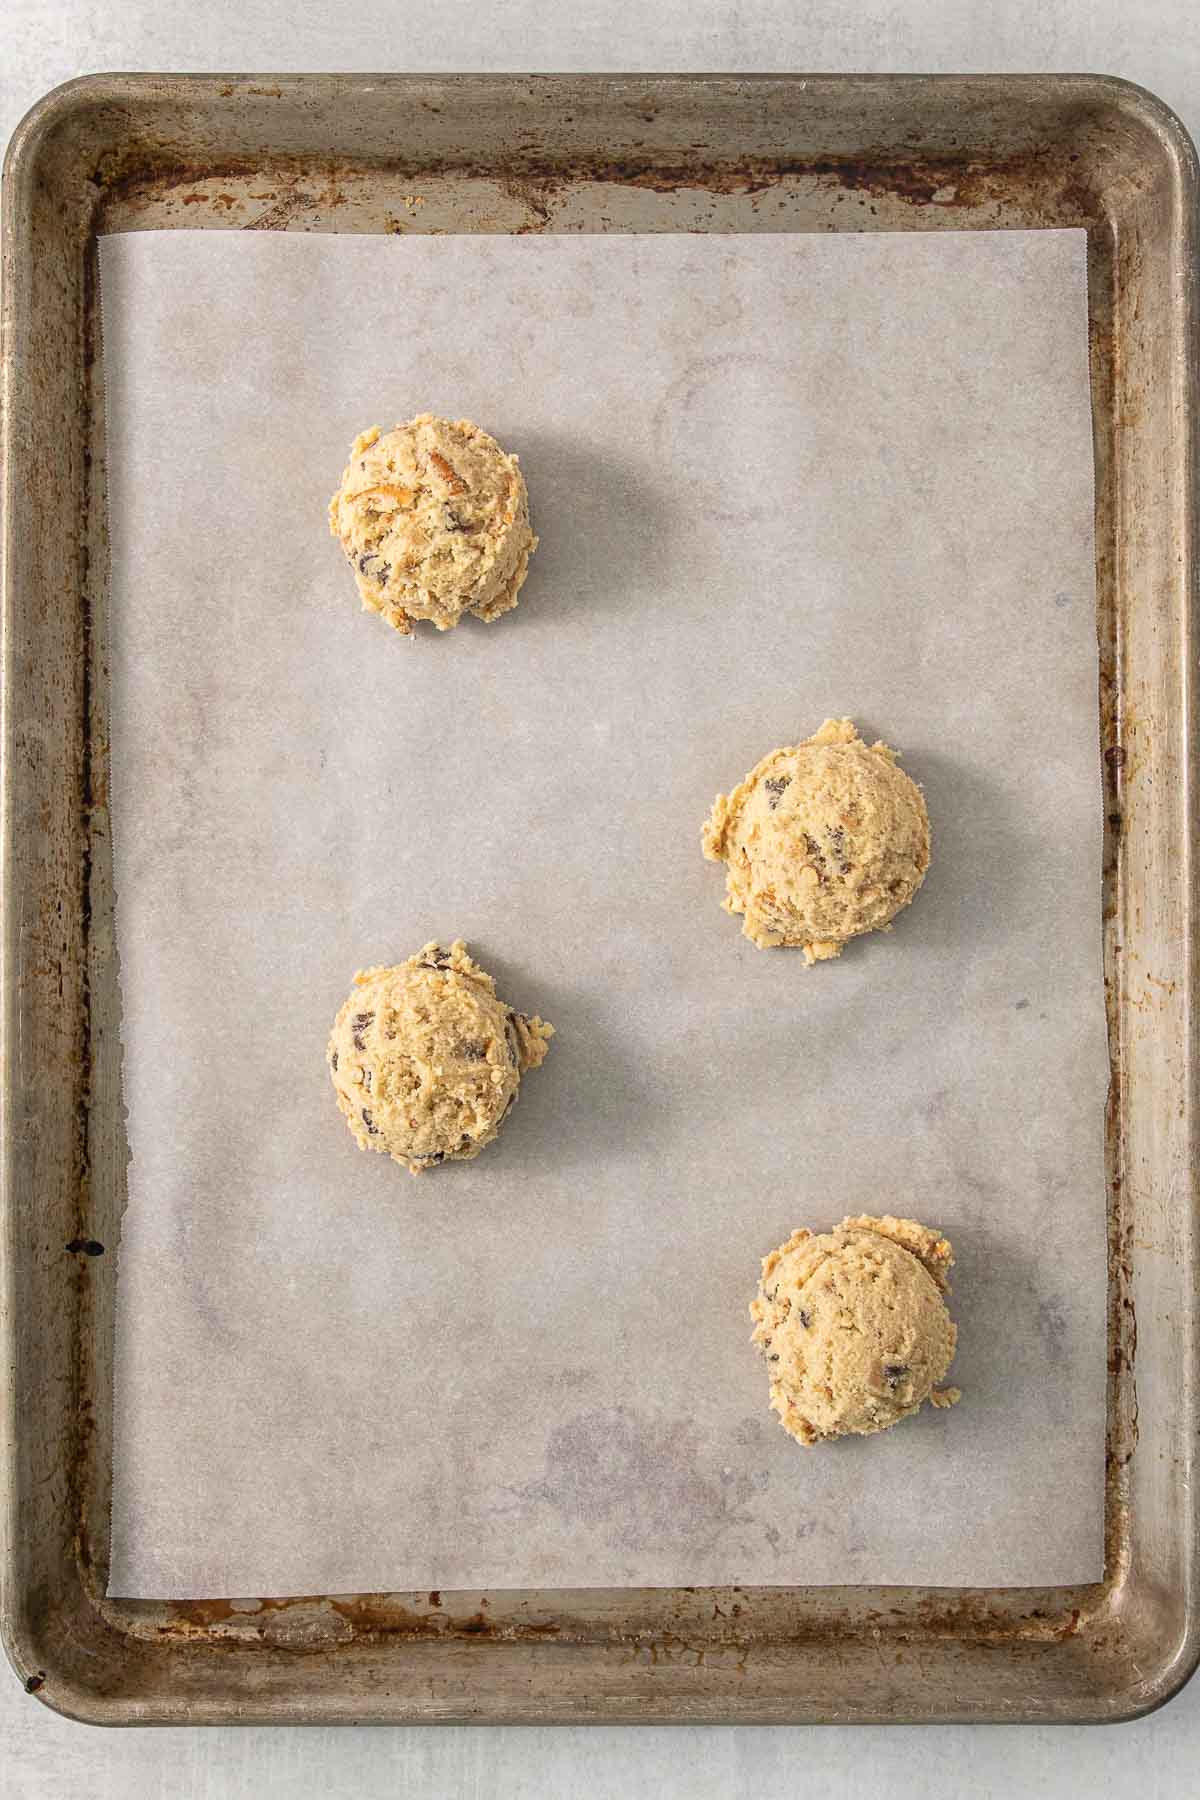 Four cookie dough balls on a baking sheet.